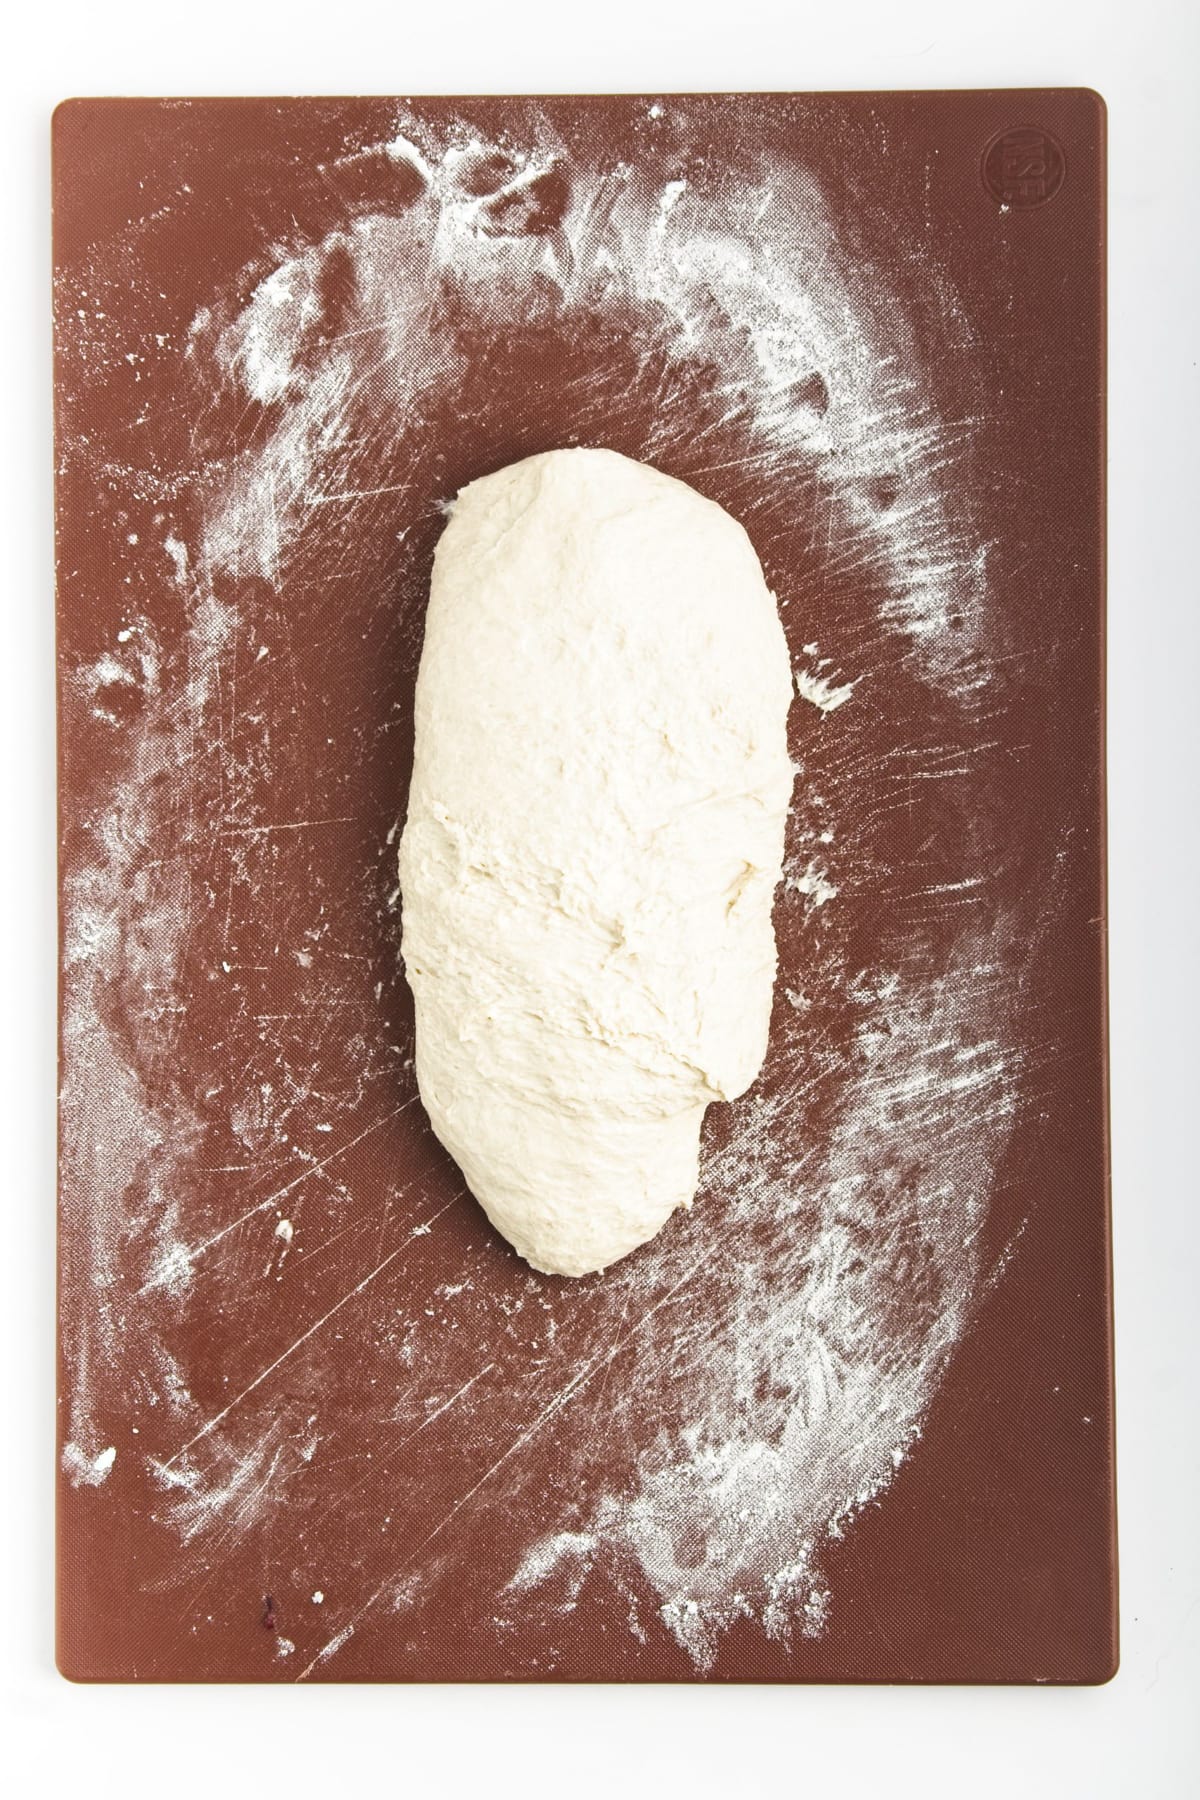 dough on a cutting board